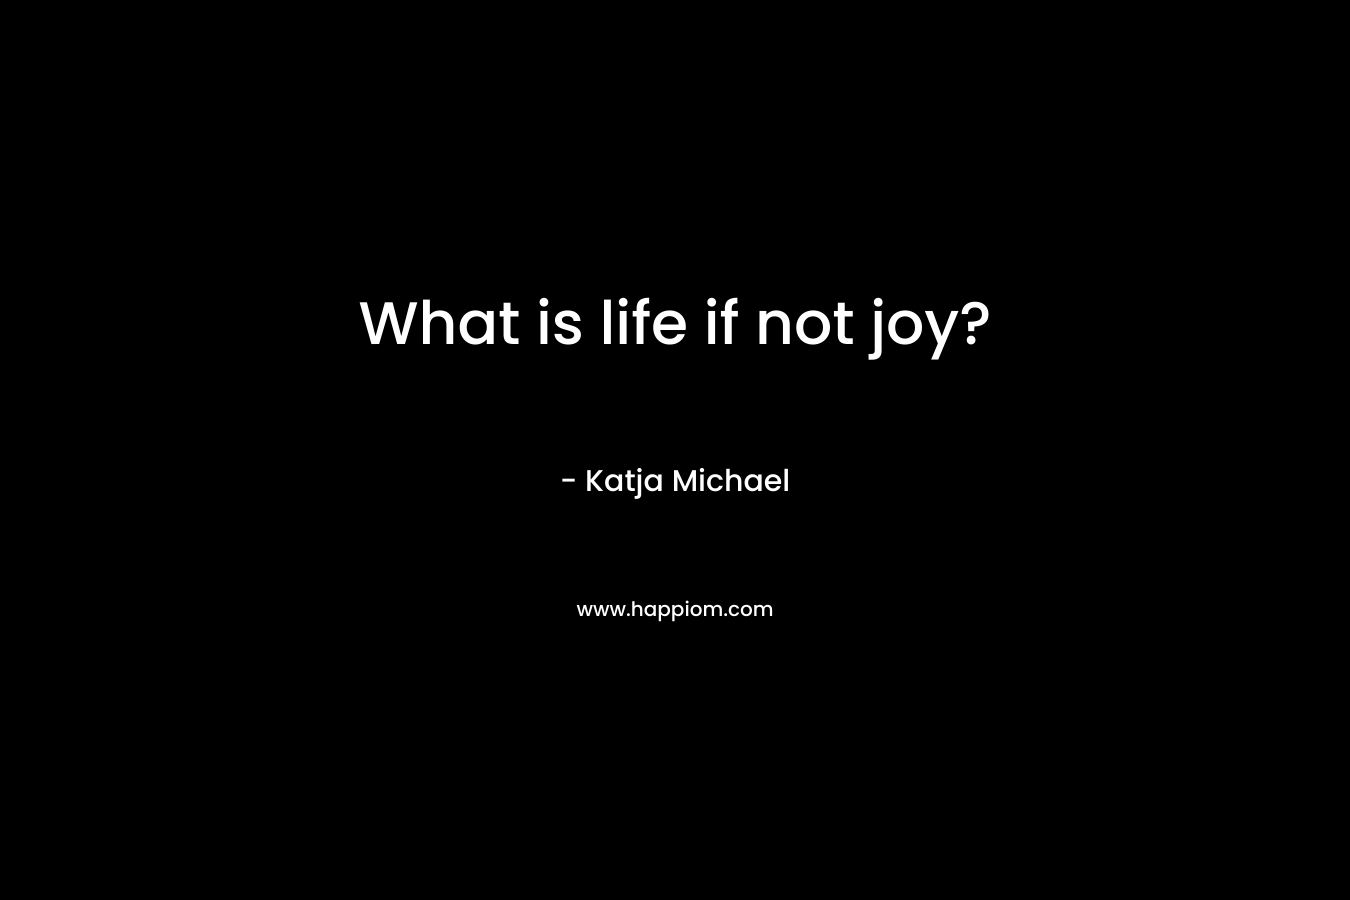 What is life if not joy? – Katja Michael